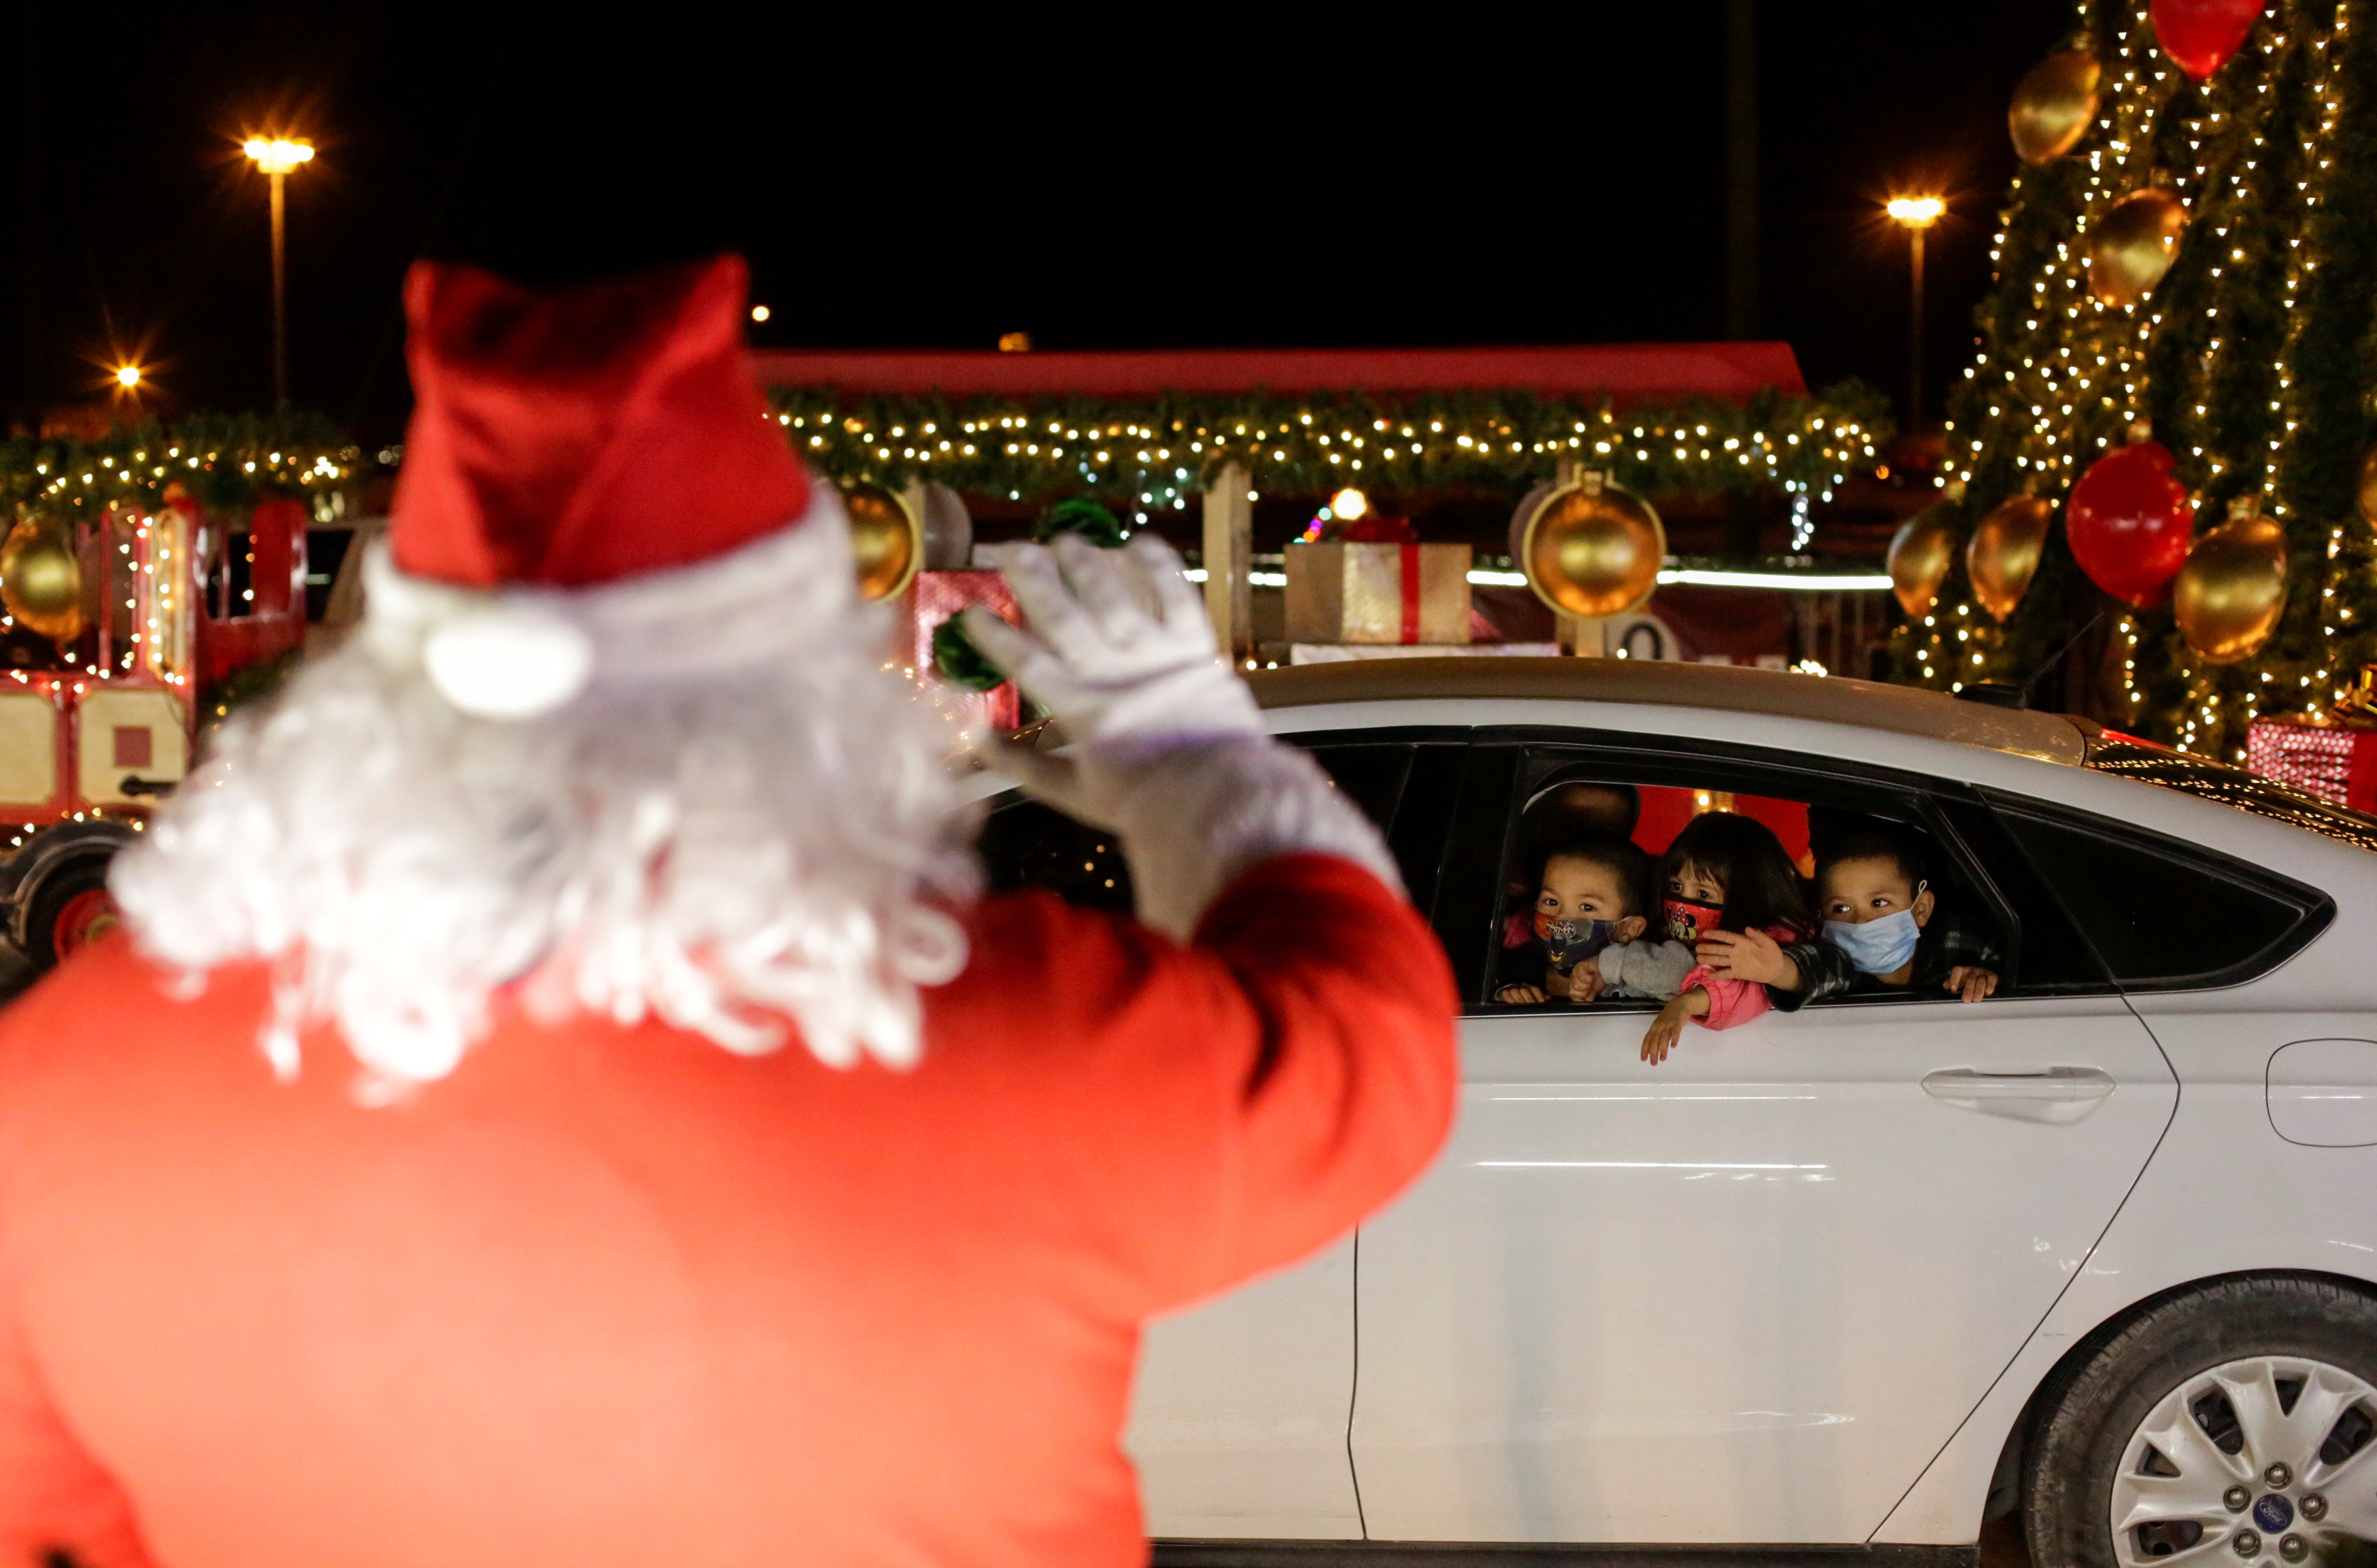 Children greet a person dressed as Santa Claus at a drive-thru Christmas village in Ciudad Juarez